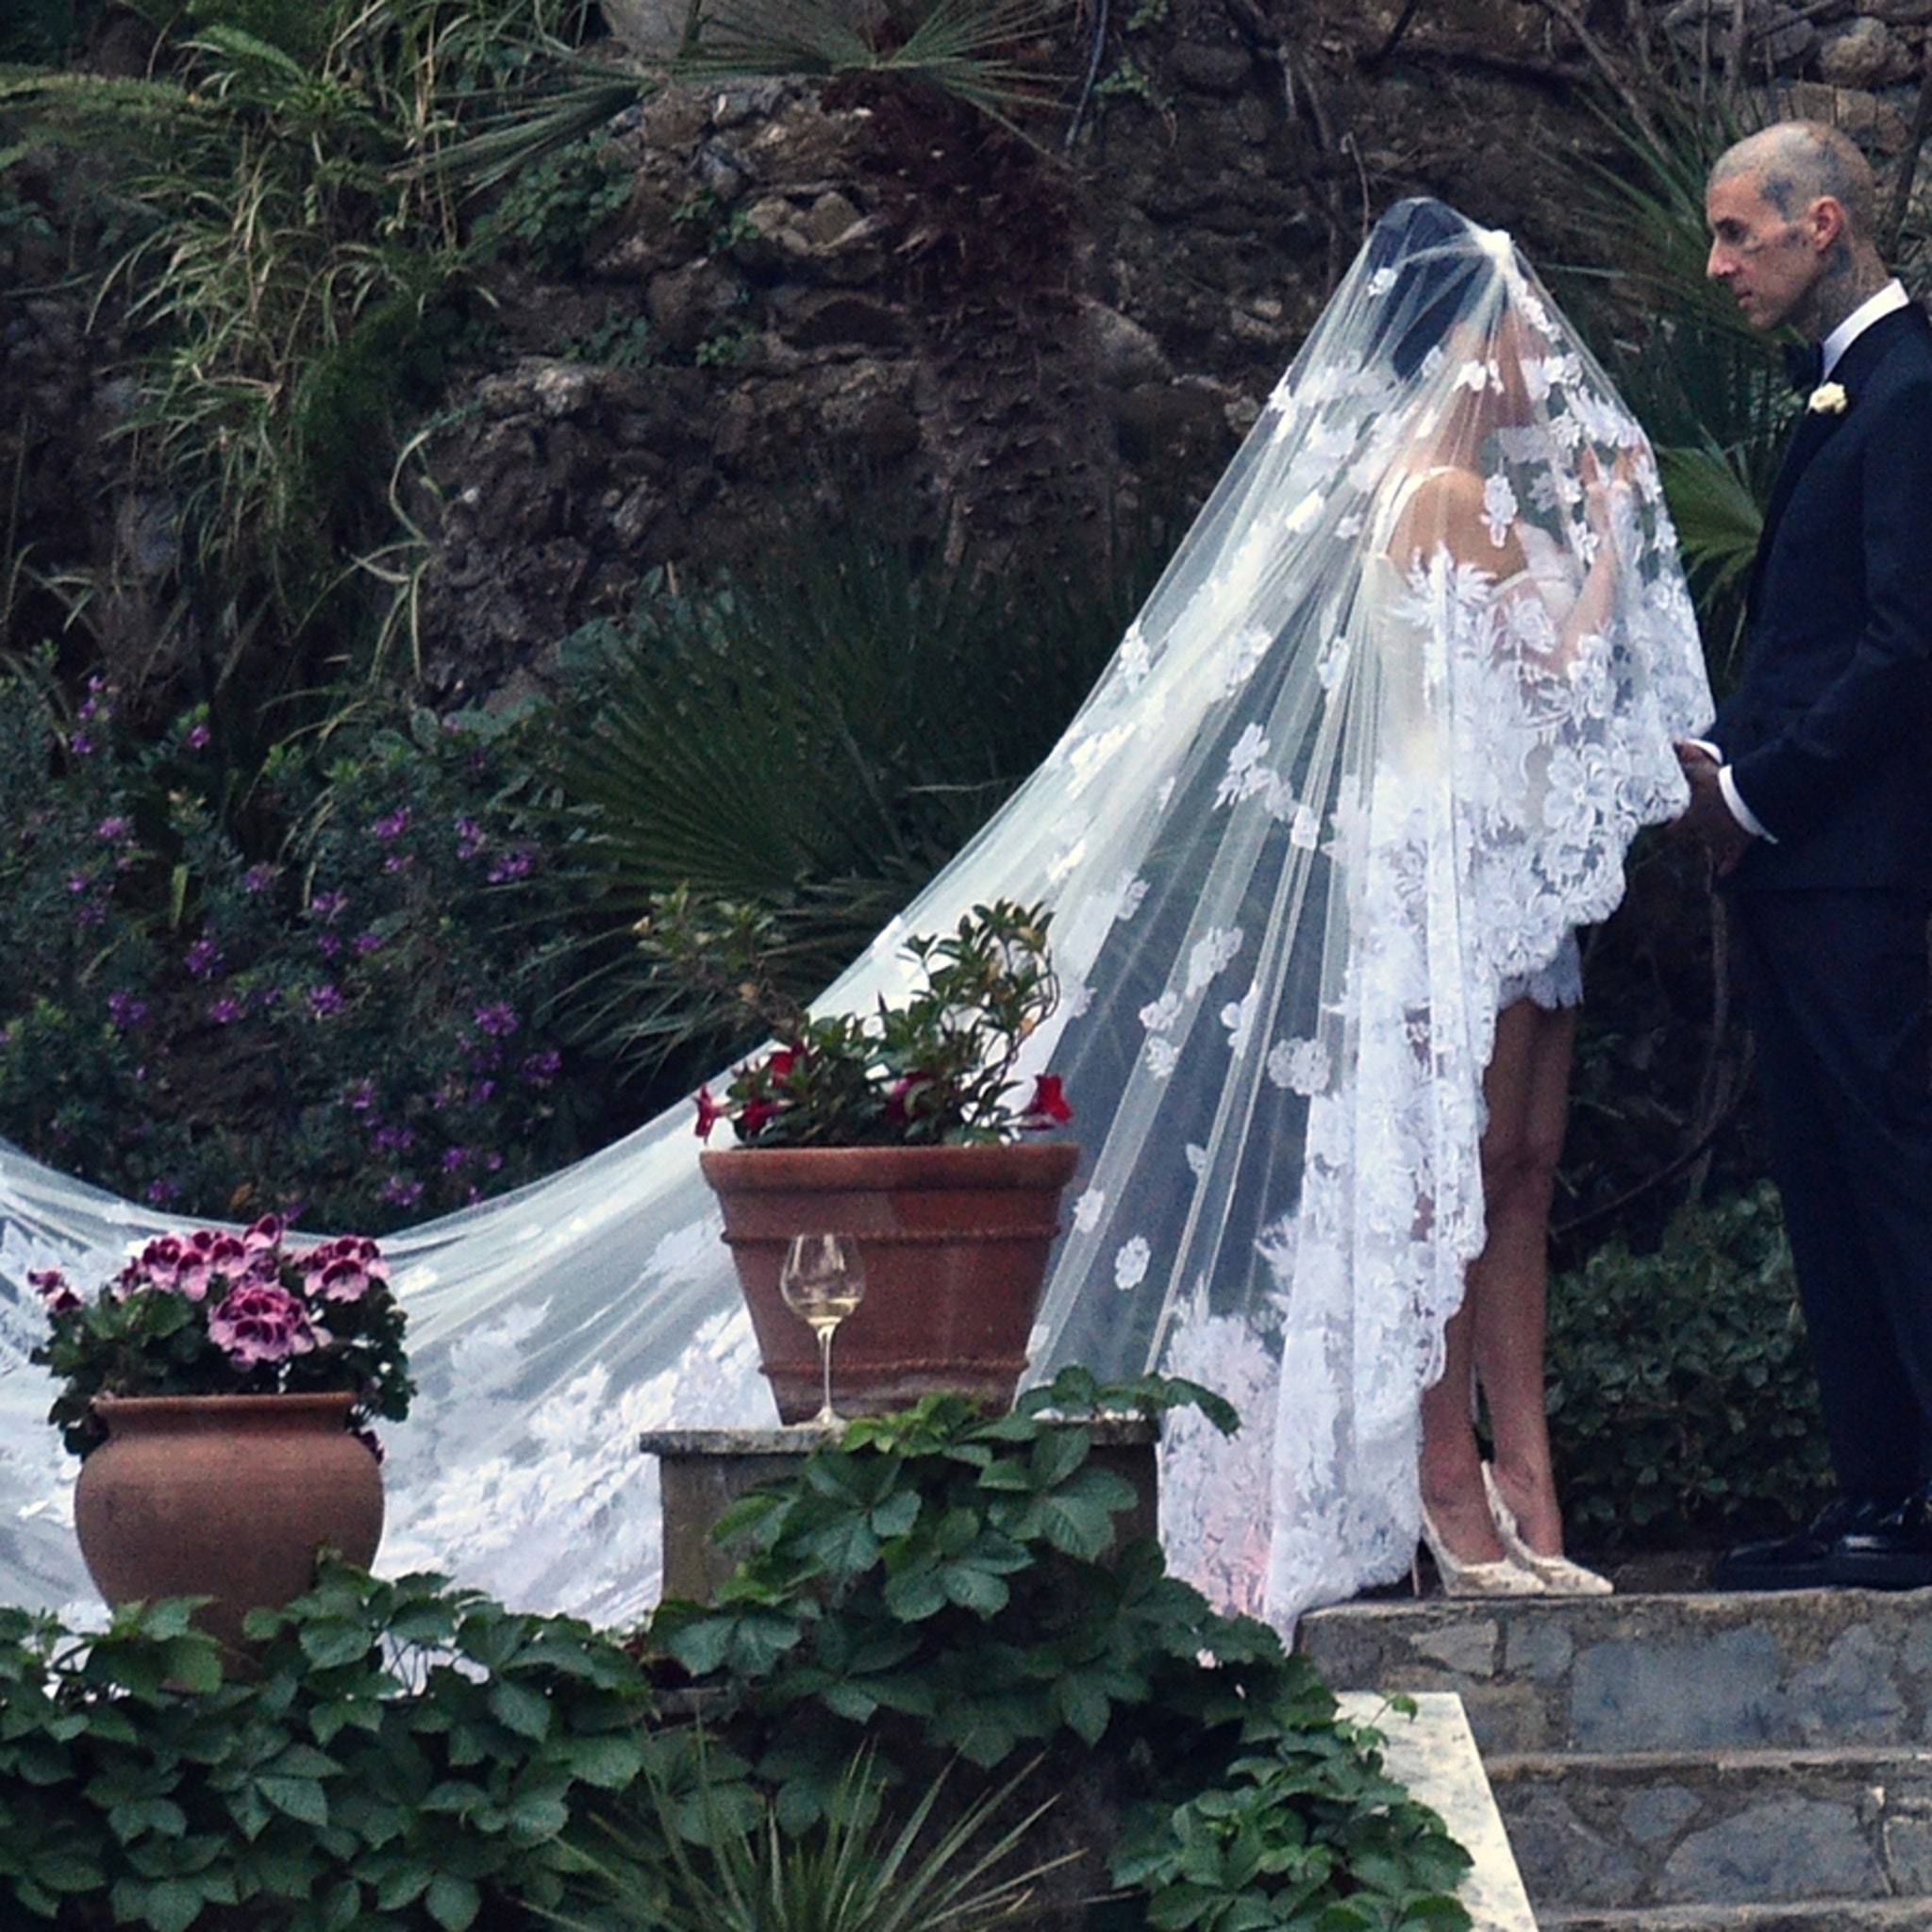 The Kardashians take over Italy ahead of Kourtney Kardashian's wedding